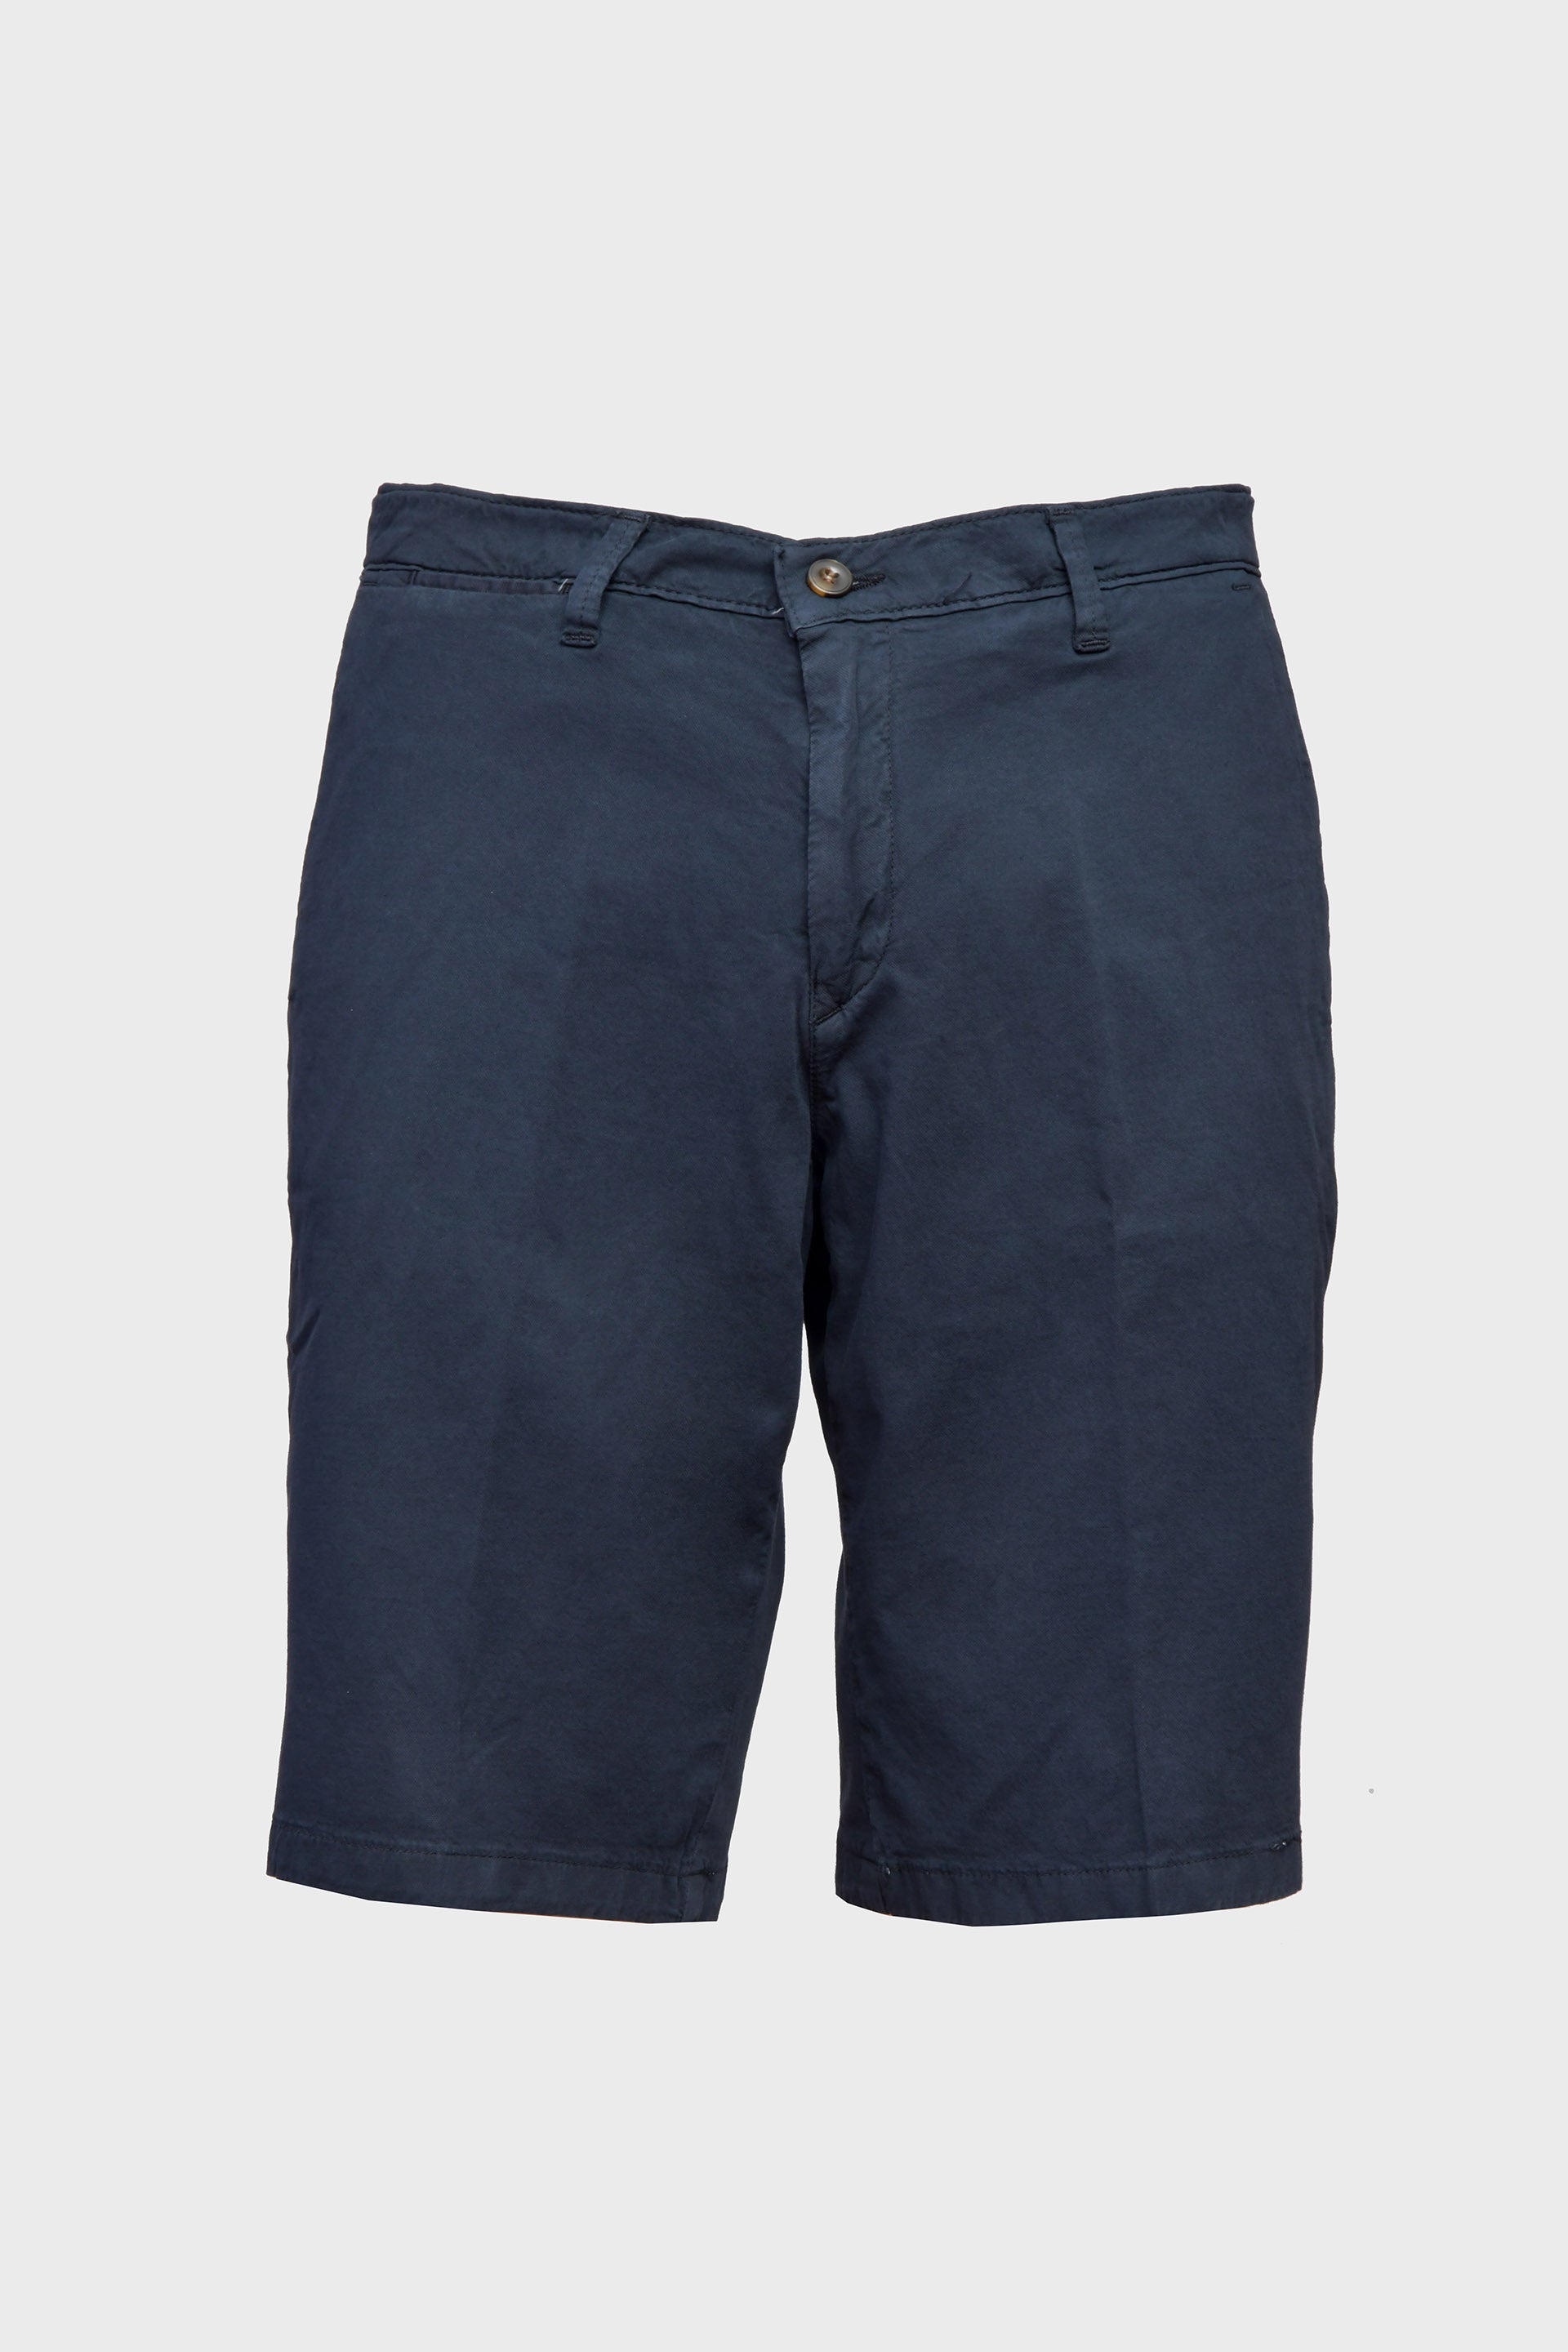 Blue Navy Stretch Cotton Shorts